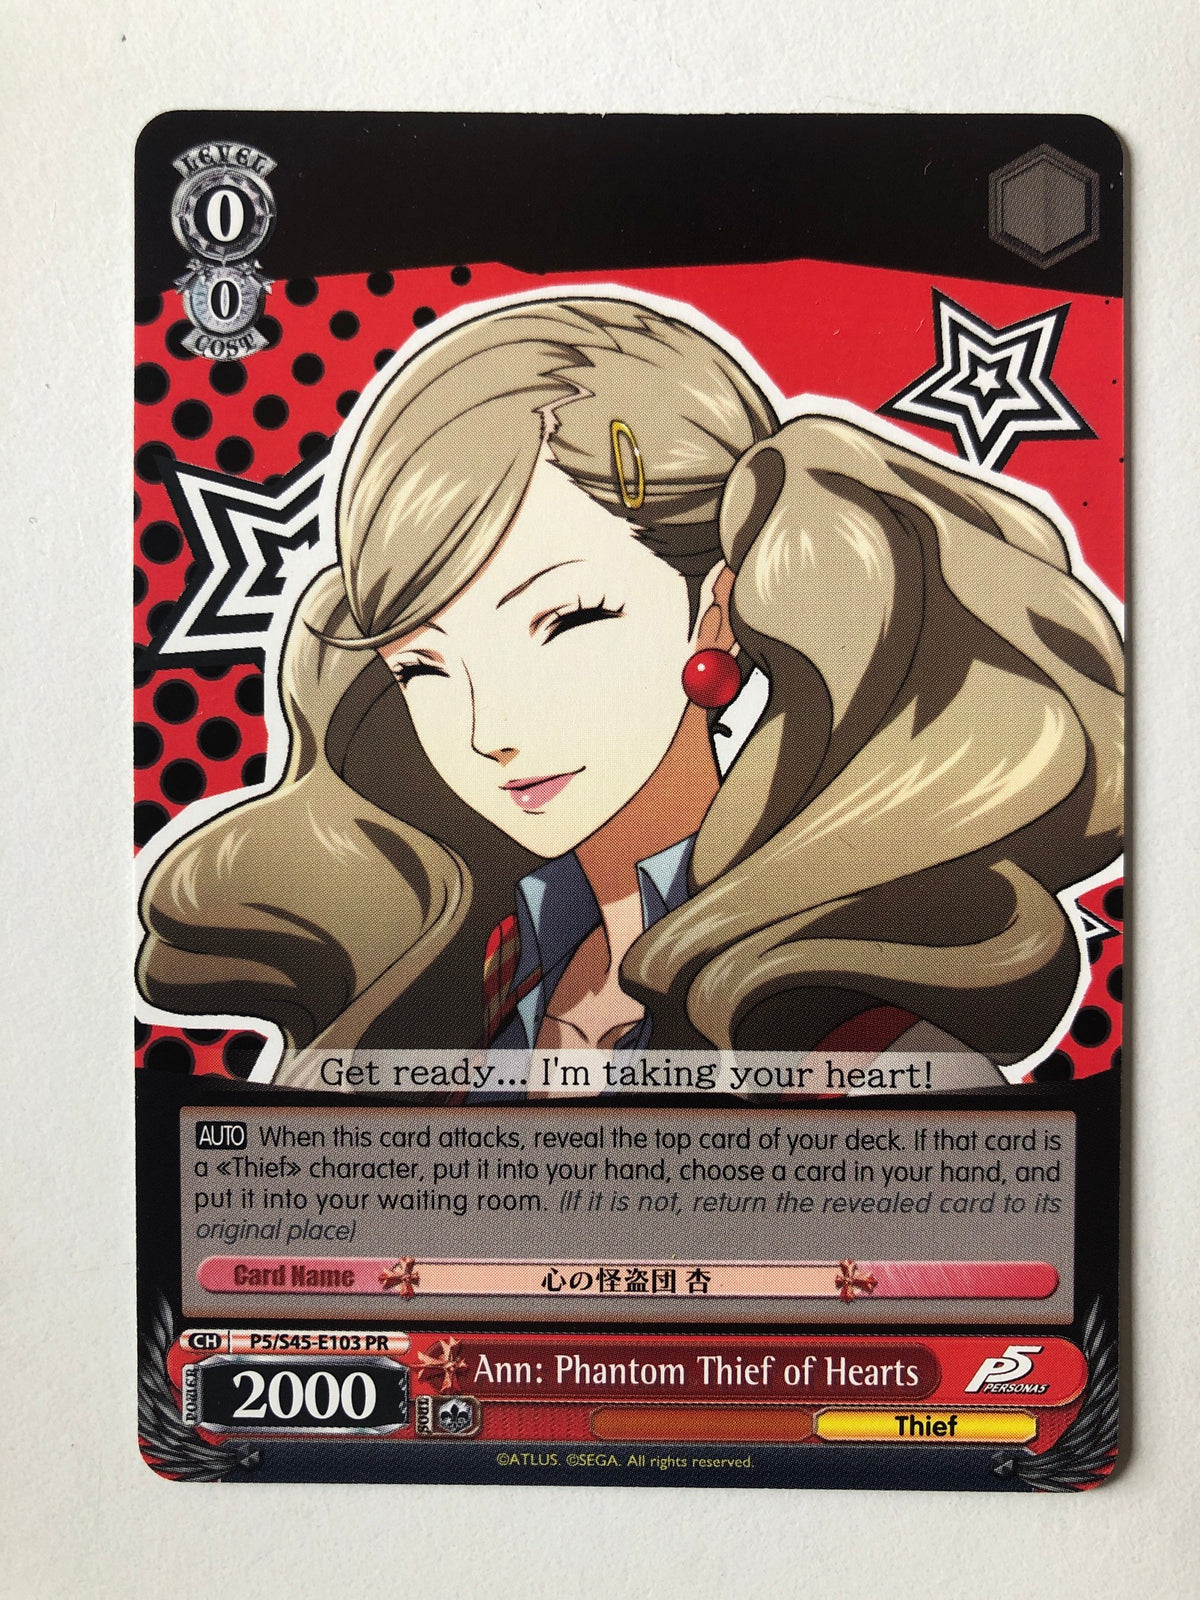 Ann: Phantom Thief of Hearts - P5/S45-E0103 PR (M/NM)